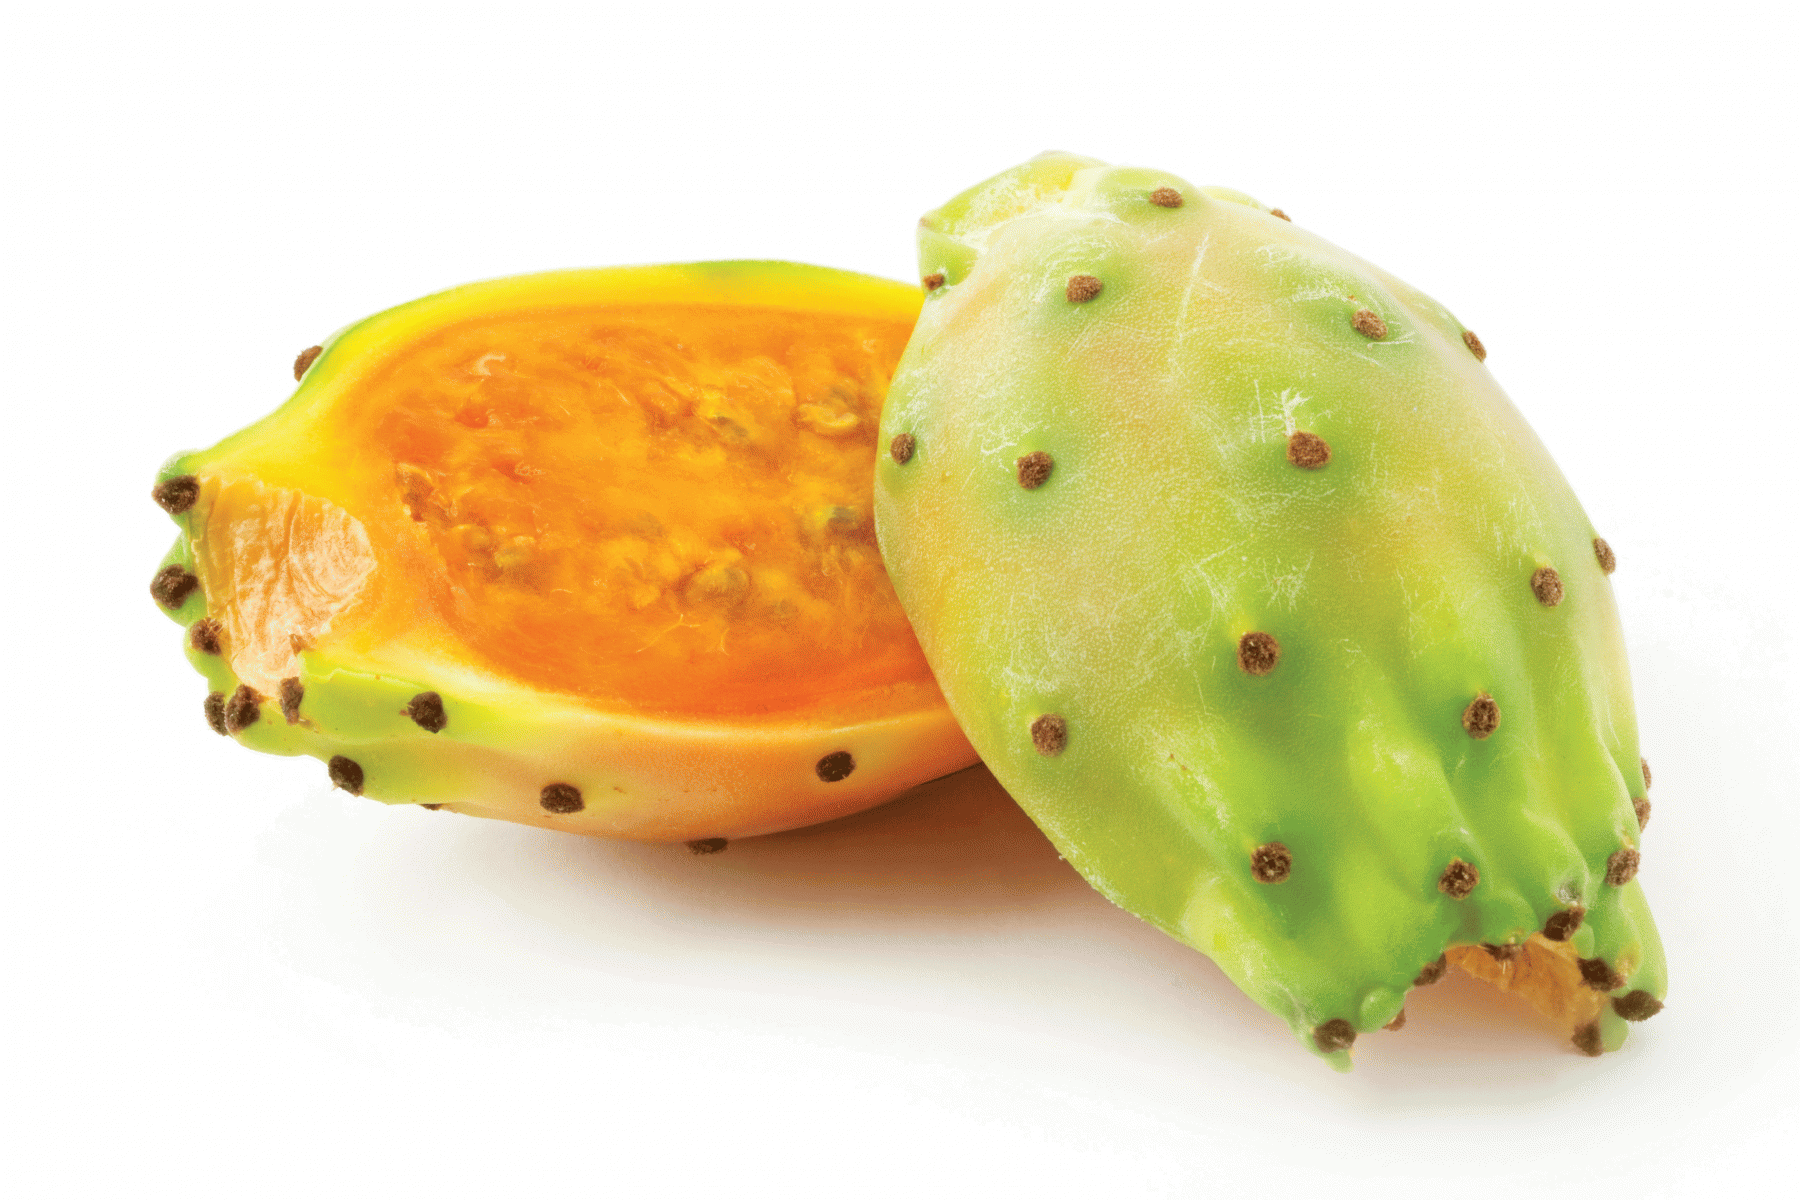 Ingredient Spotlight: Prickly Pear